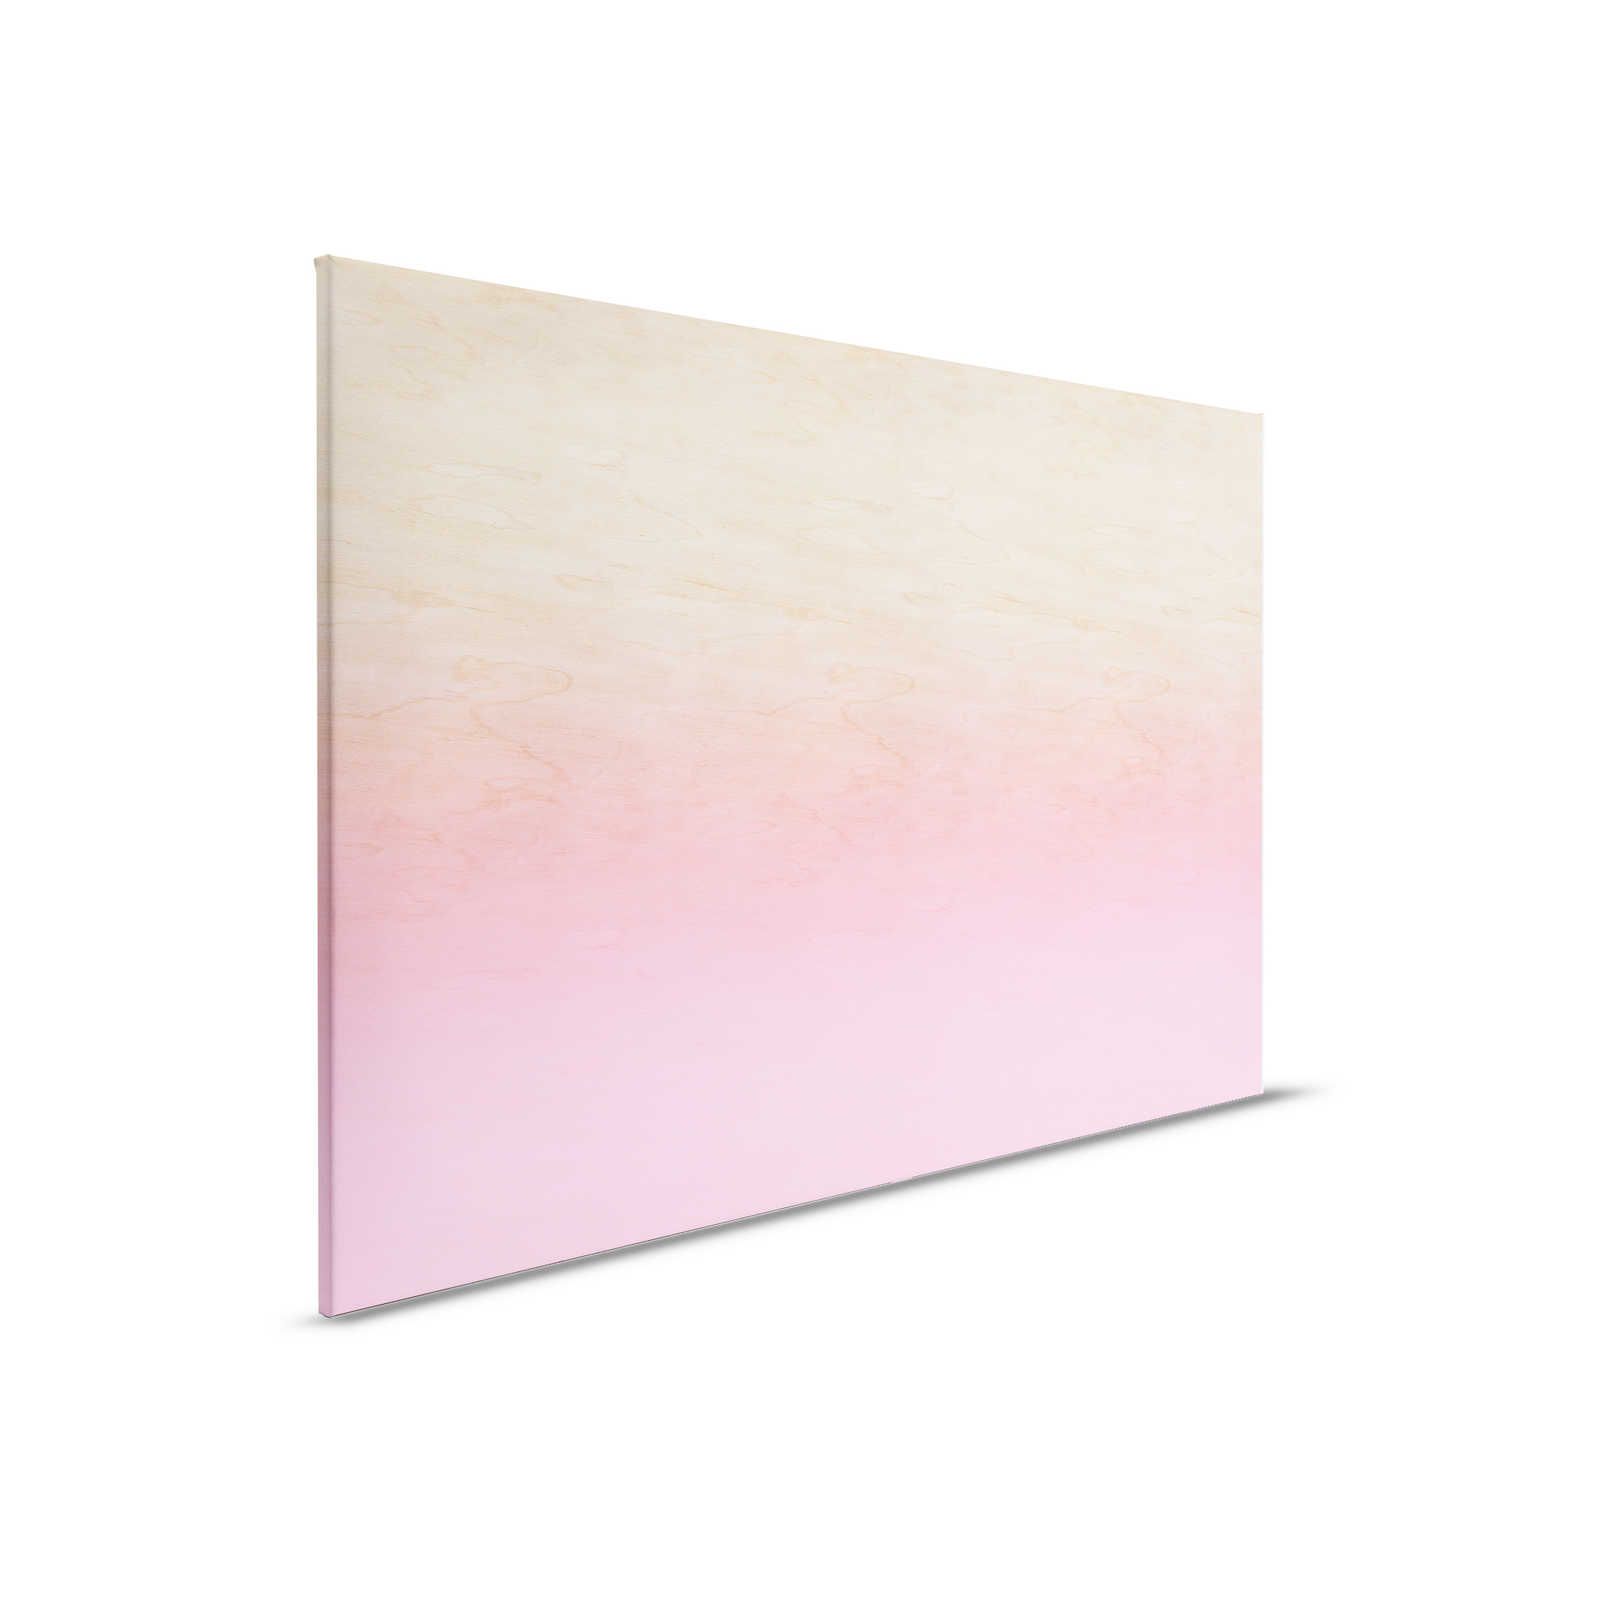         Workshop 1 - Canvas painting Pink Ombre Effect & Wood Grain - 0.90 m x 0.60 m
    